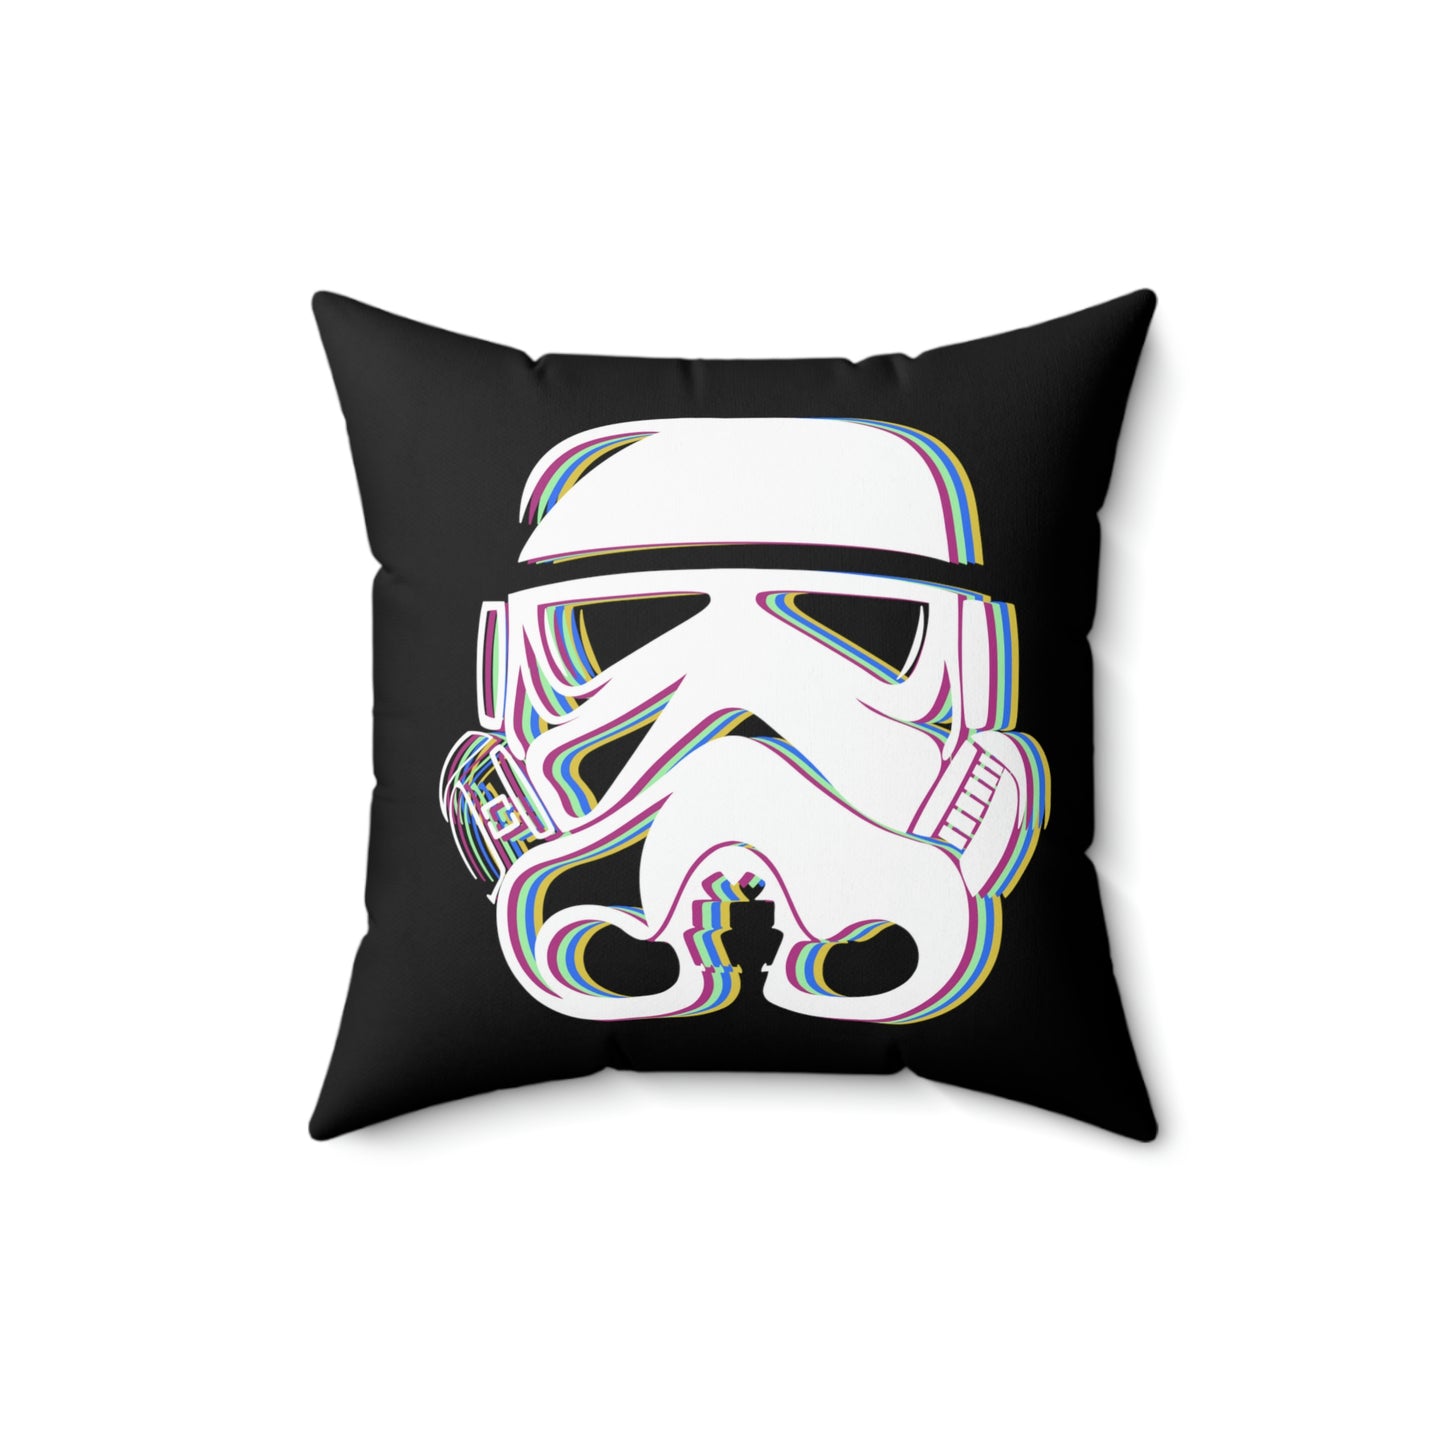 Spun Polyester Square Pillow Case ”Storm Trooper 16 on Black”